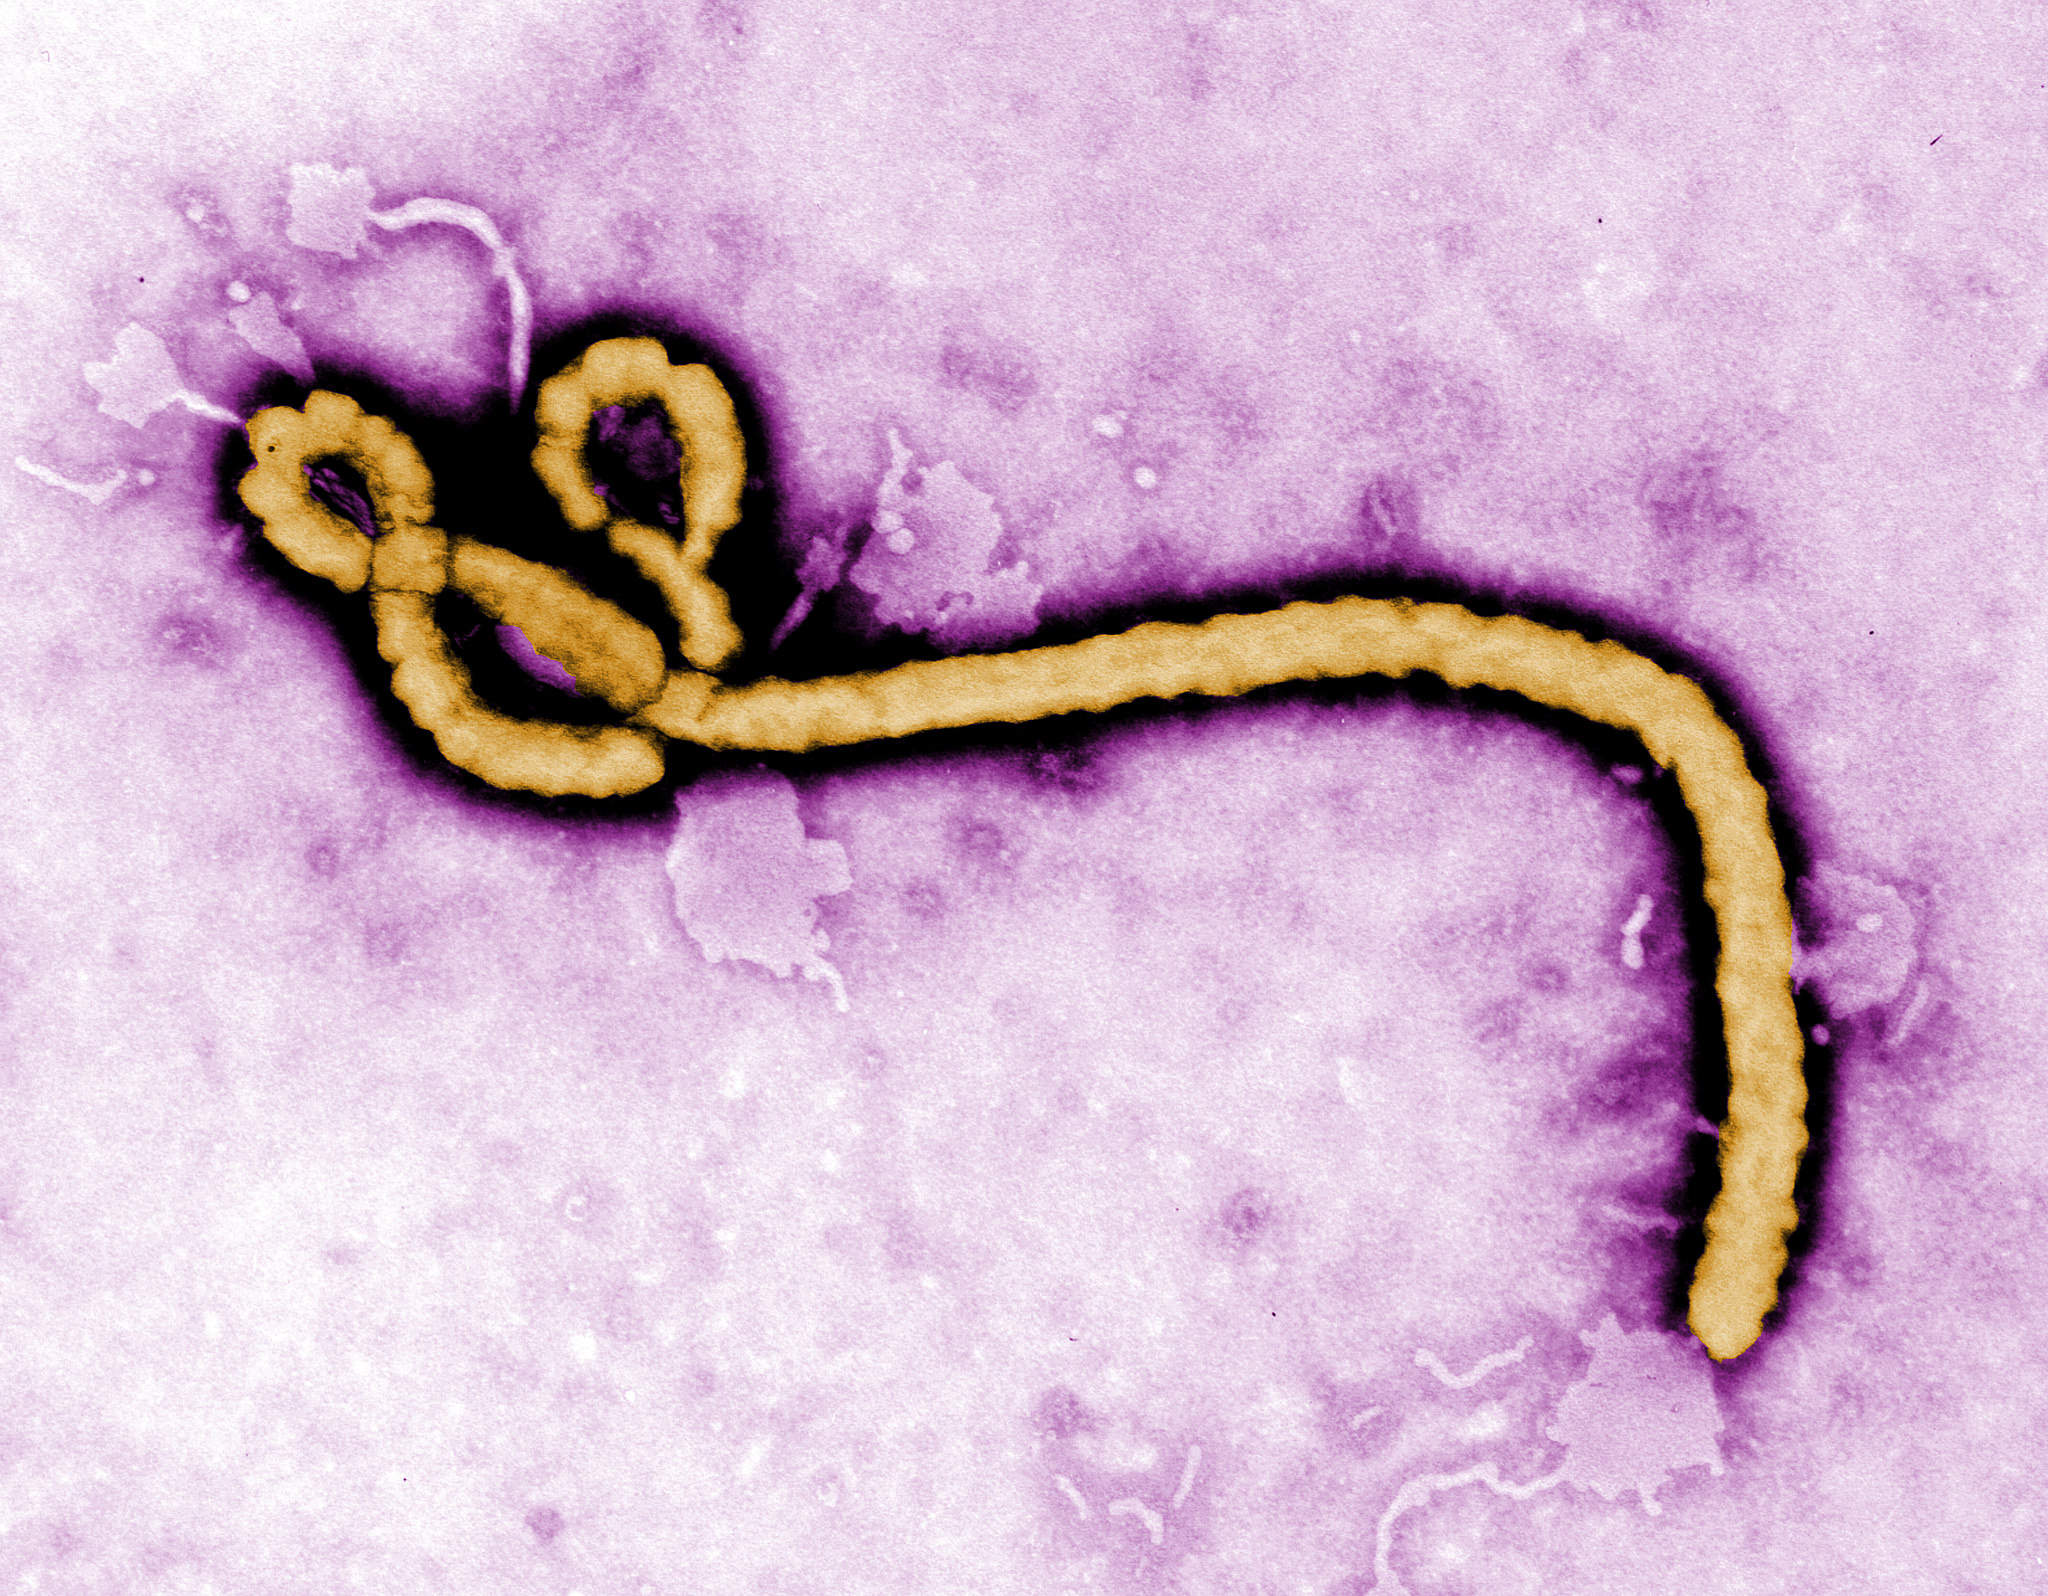 Immigration Restrictionists Exploit Ebola Tragedy